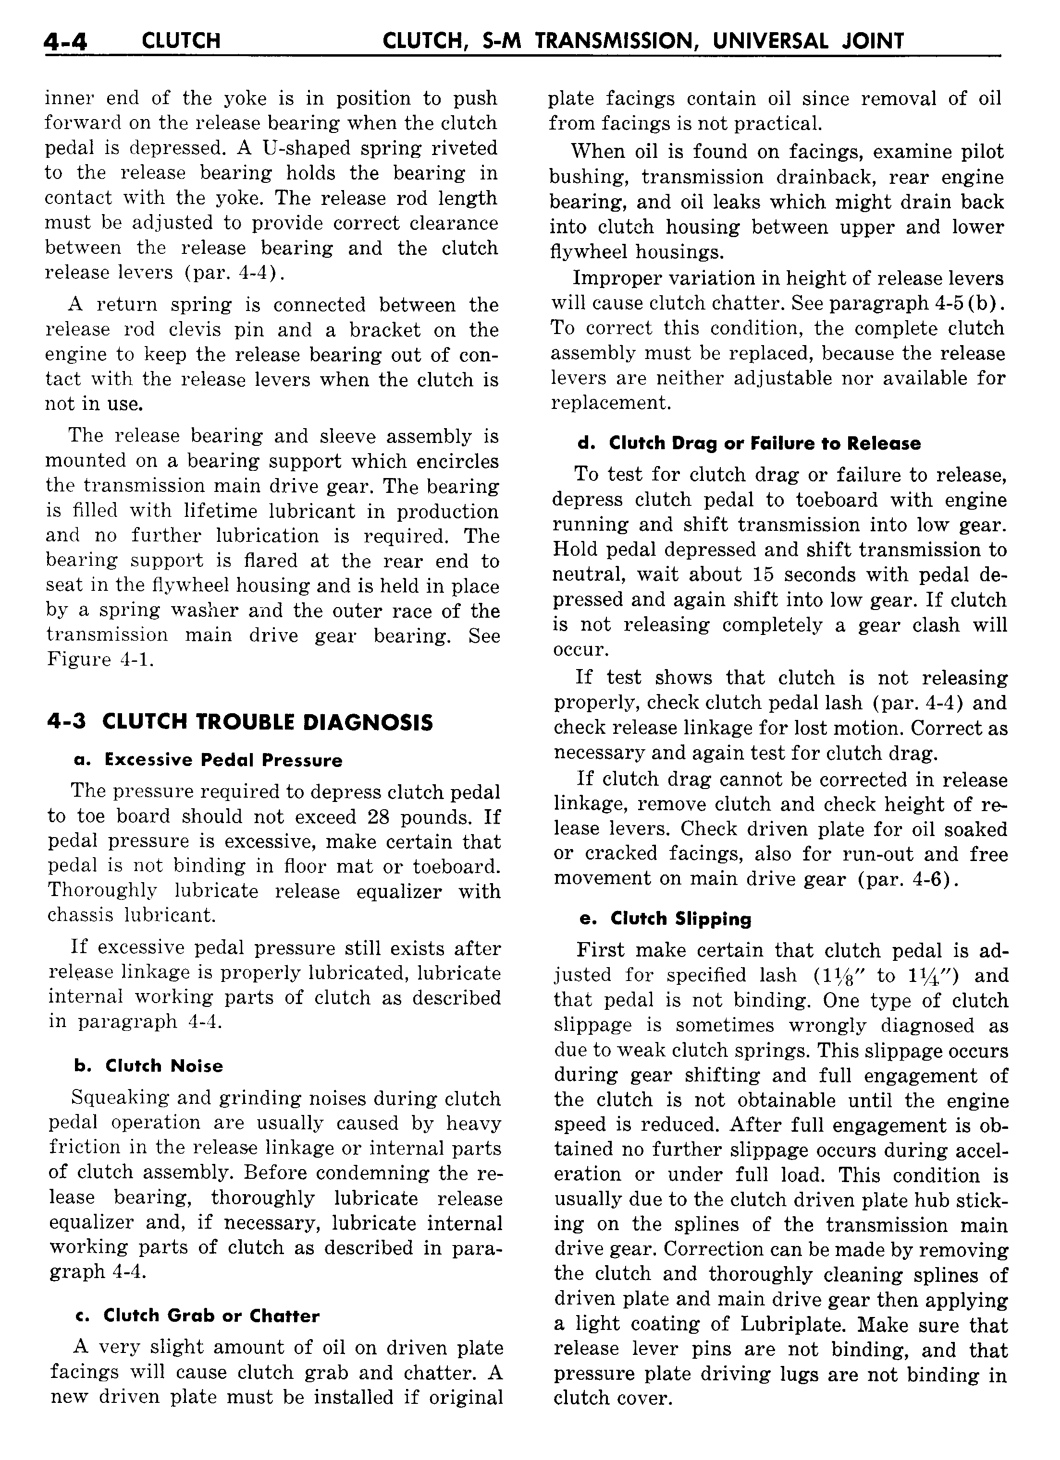 n_05 1957 Buick Shop Manual - Clutch & Trans-004-004.jpg